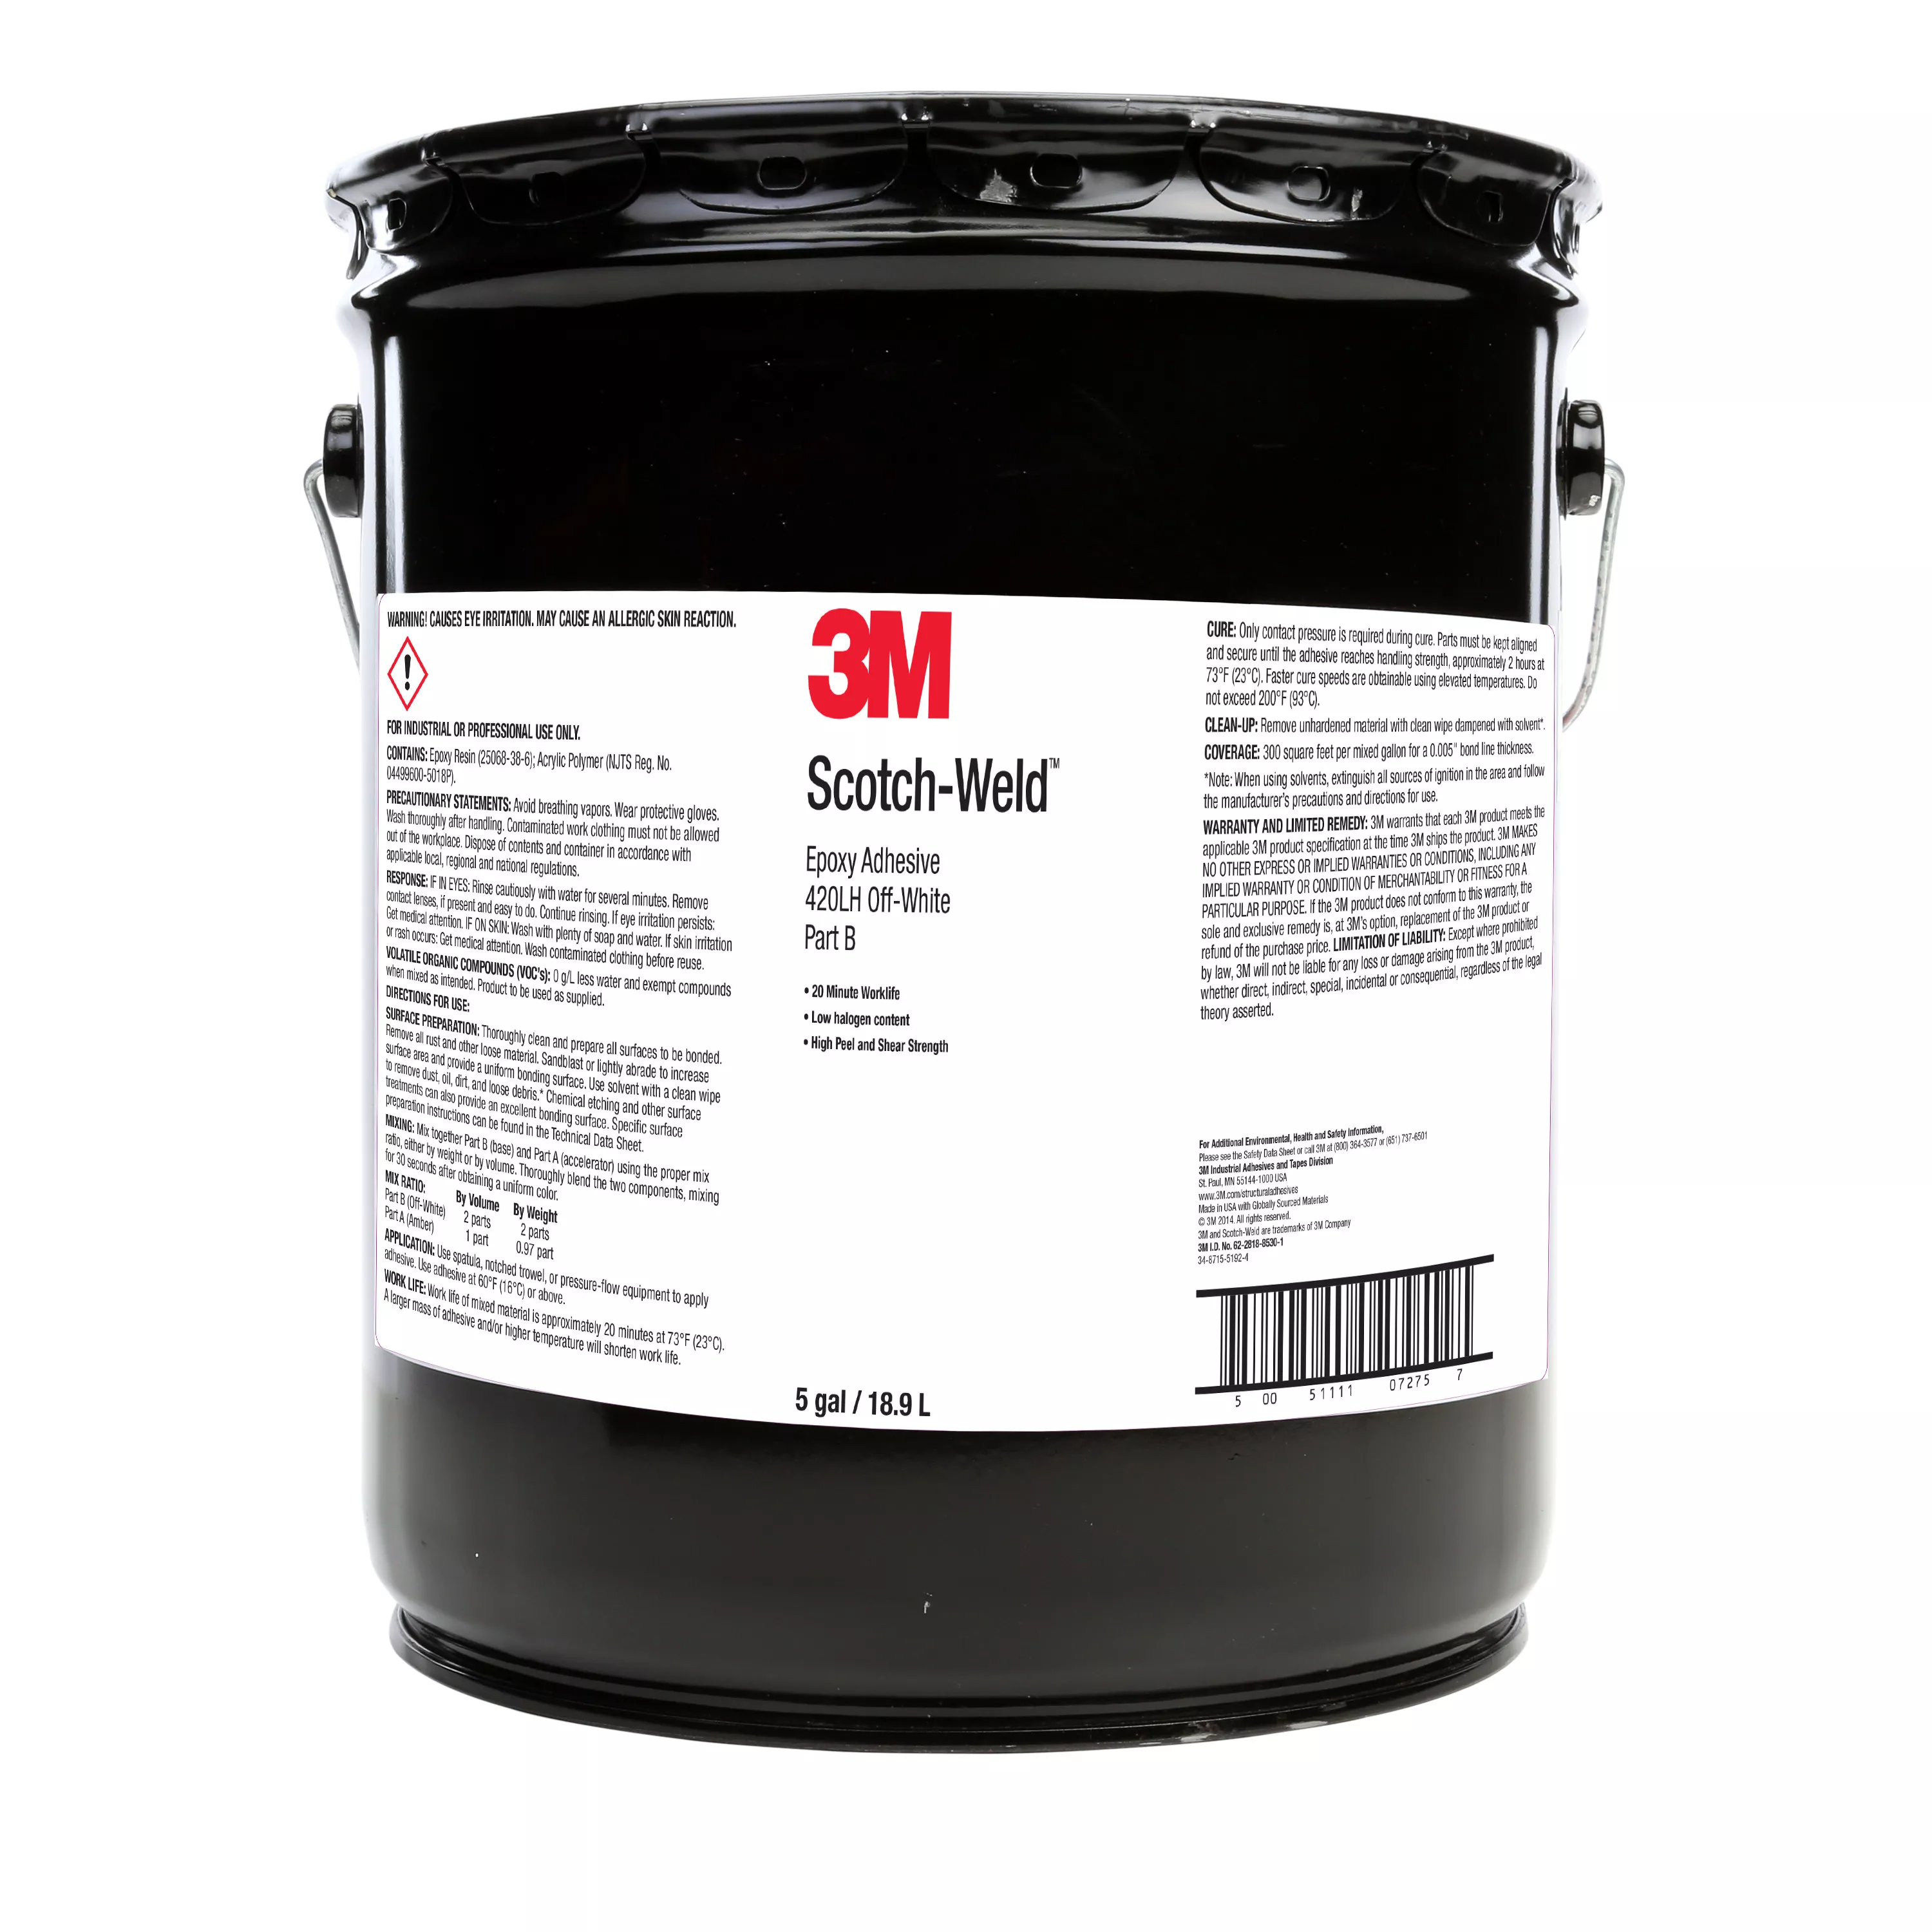 3M™ Scotch-Weld™ Epoxy Adhesive 420LH, Off-White, Part B, 5 Gallon
(Pail), Drum